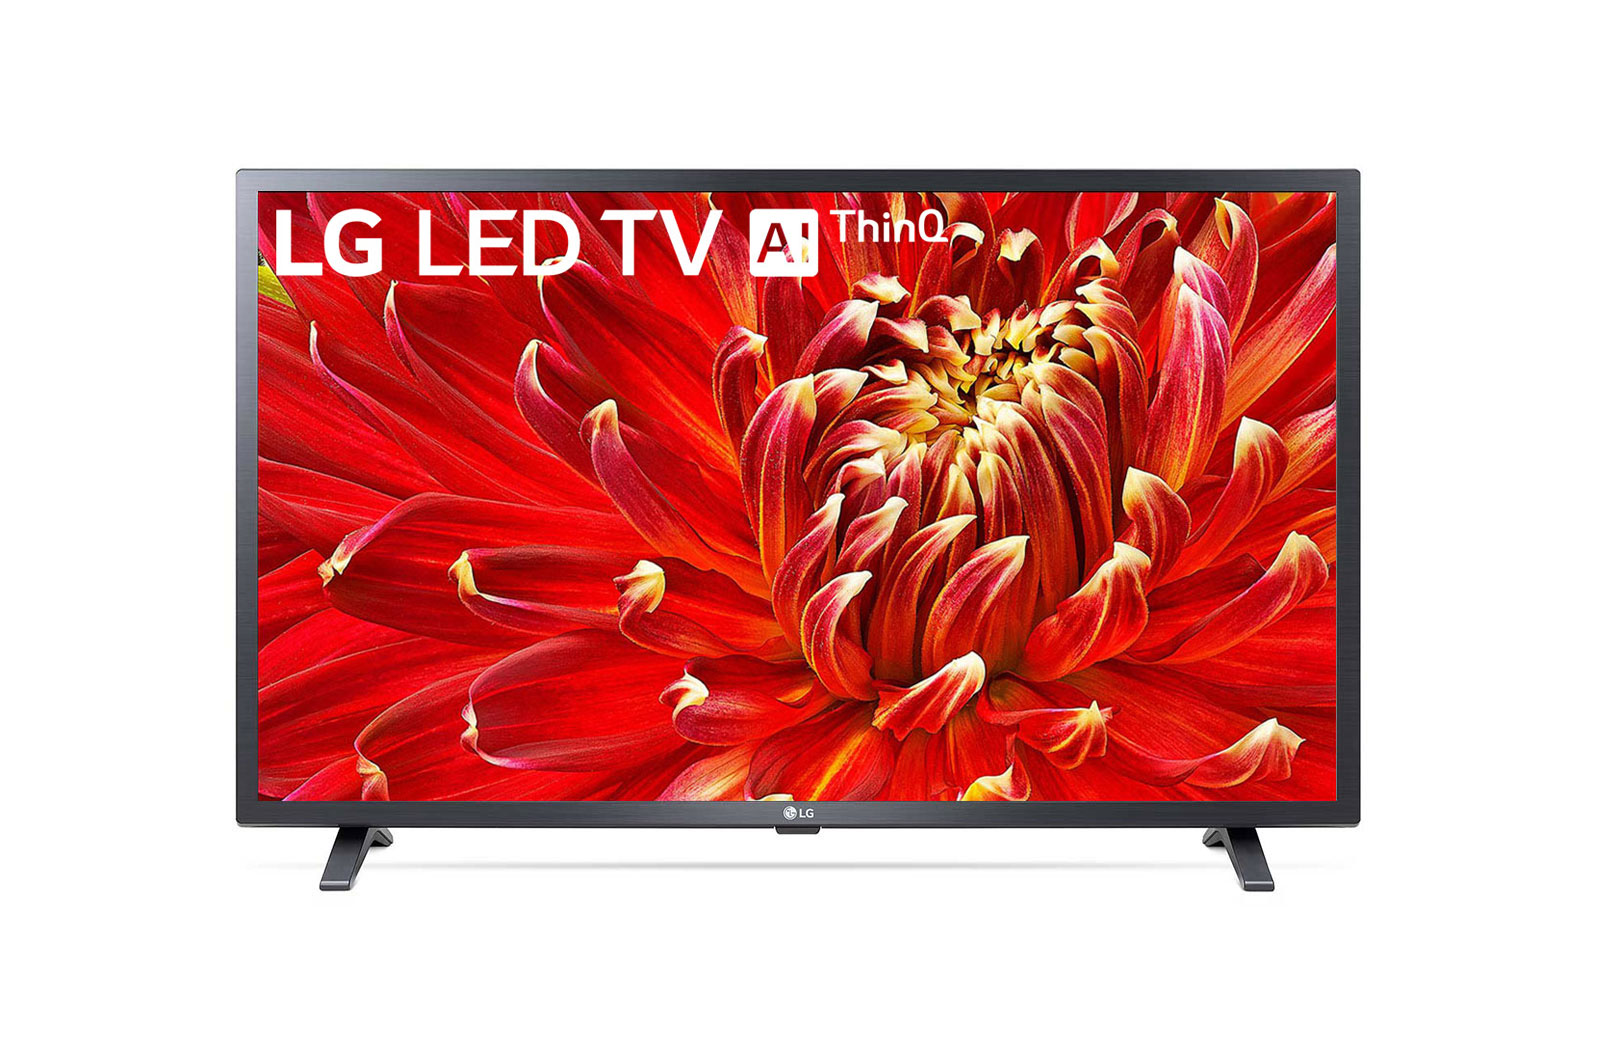 inch LED TV Best smart TV Full HD Display | LG UAE